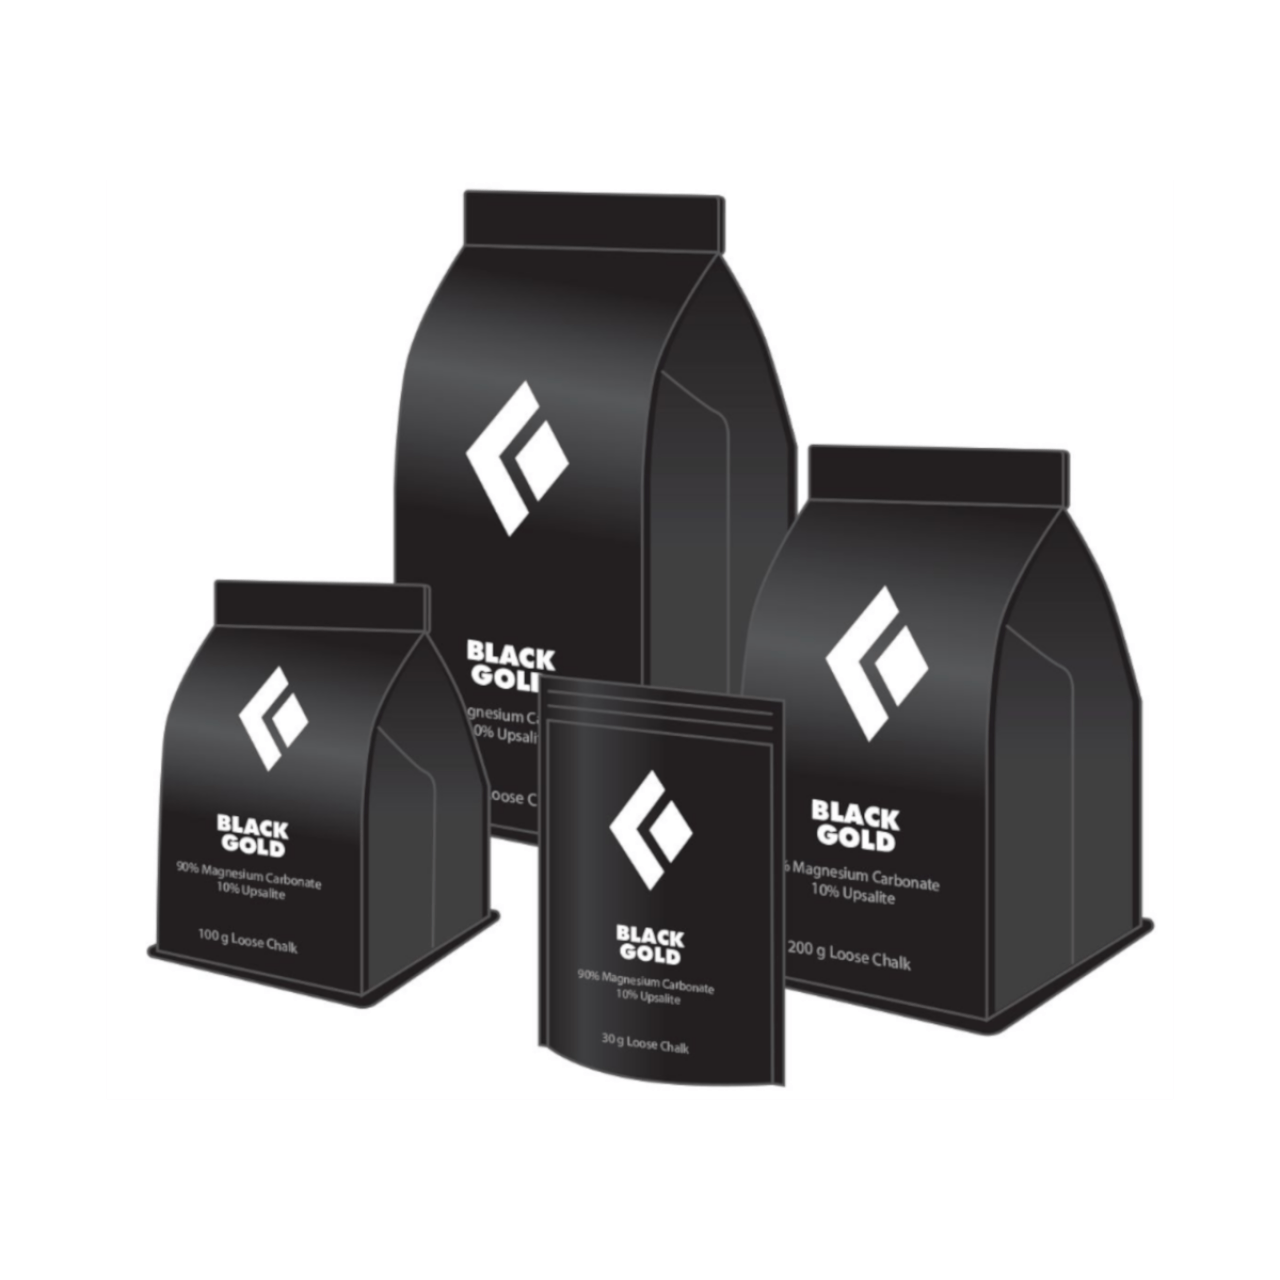 Black White and Gold Logo - Black Diamond Black Gold Loose Chalk | Chalk & Accessories ...